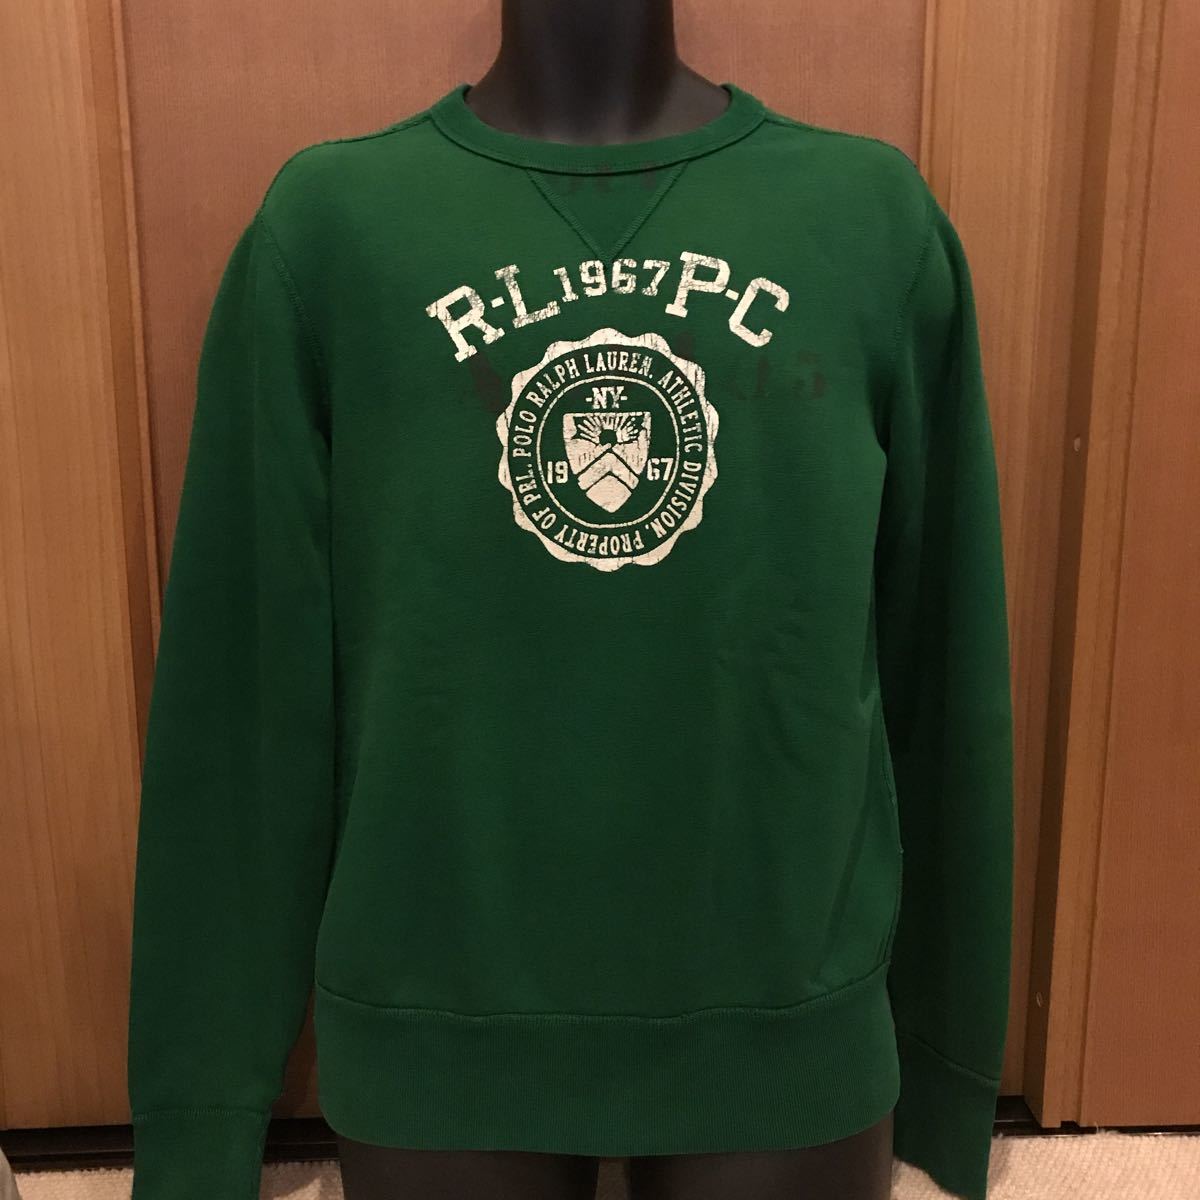  Ralph Lauren sweat sweatshirt Vintage green sweatshirt American Casual search Champion Tommy Hilfiger Orient enta-